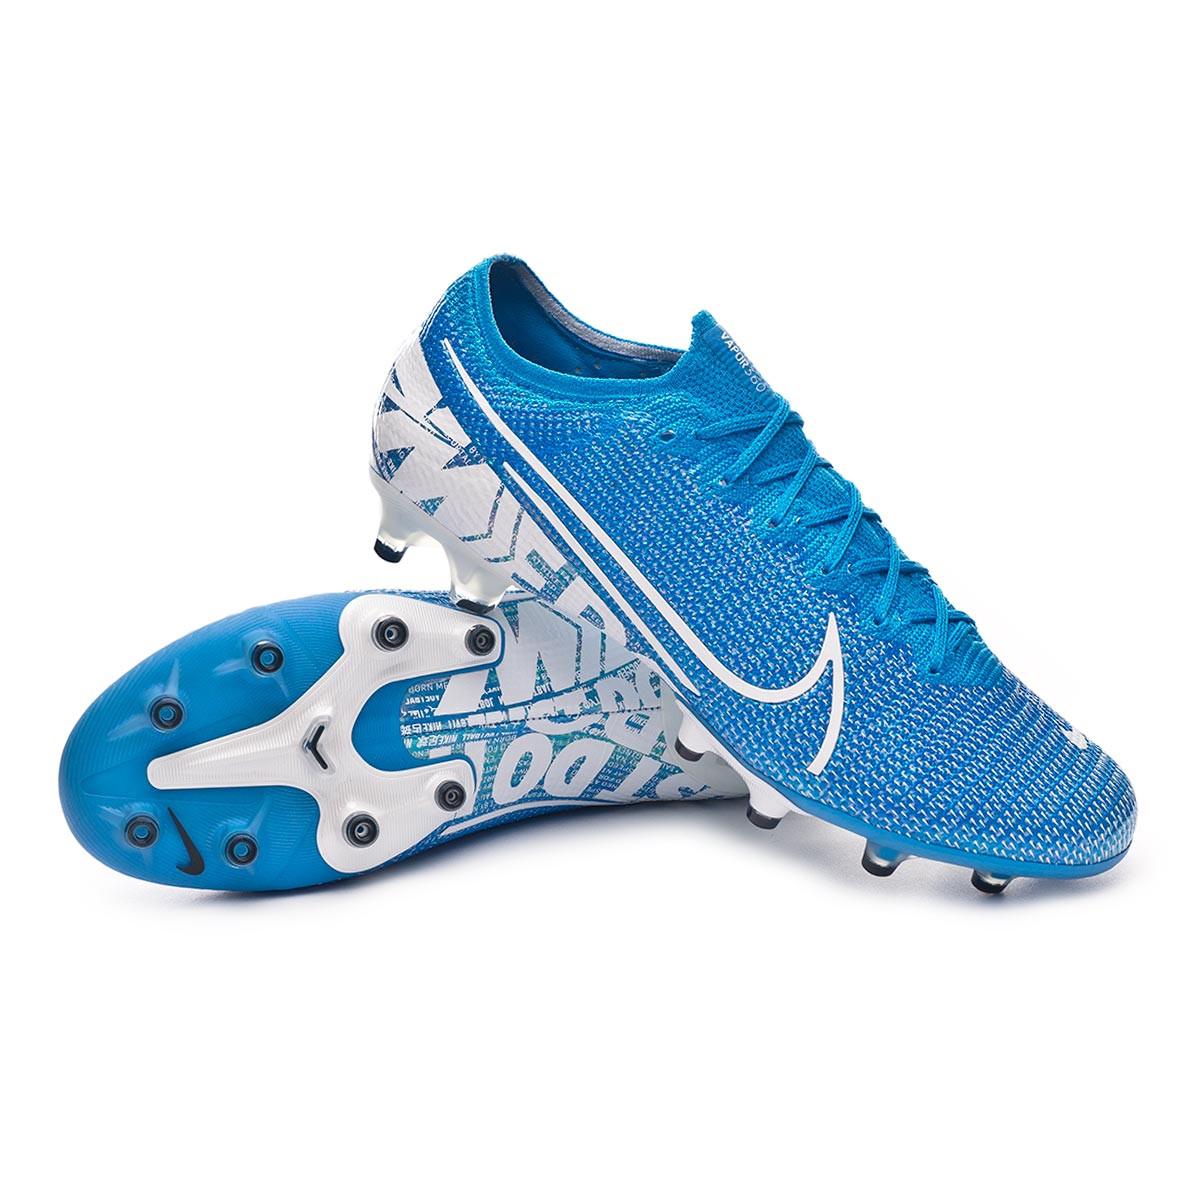 Bota de fútbol Nike Mercurial Vapor XIII Elite AG-Pro Blue  hero-White-Volt-Obsidian - Tienda de fútbol Fútbol Emotion